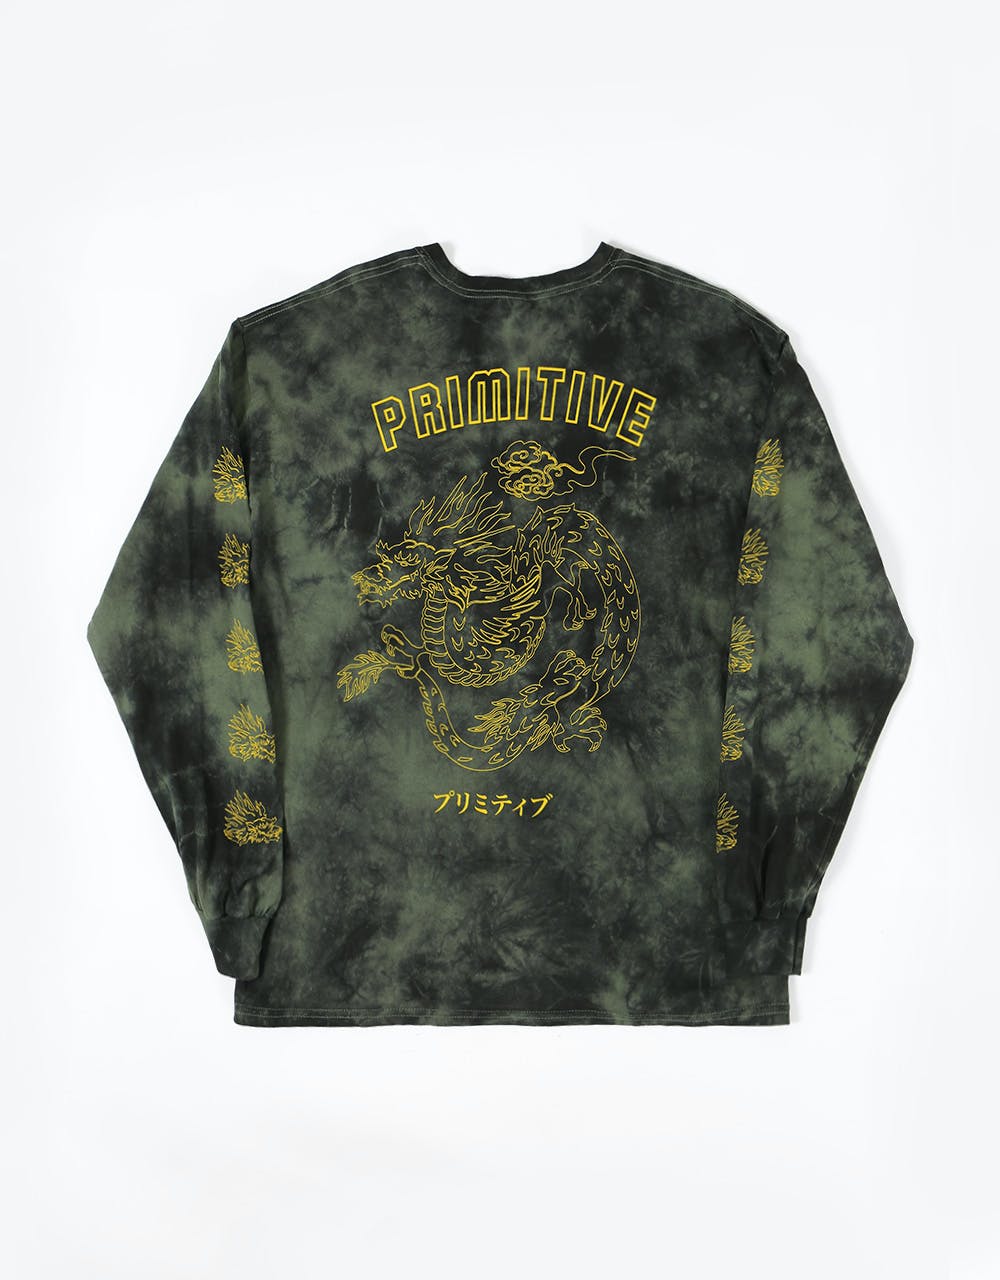 Primitive Dynasty L/S T-Shirt - Military Green Black